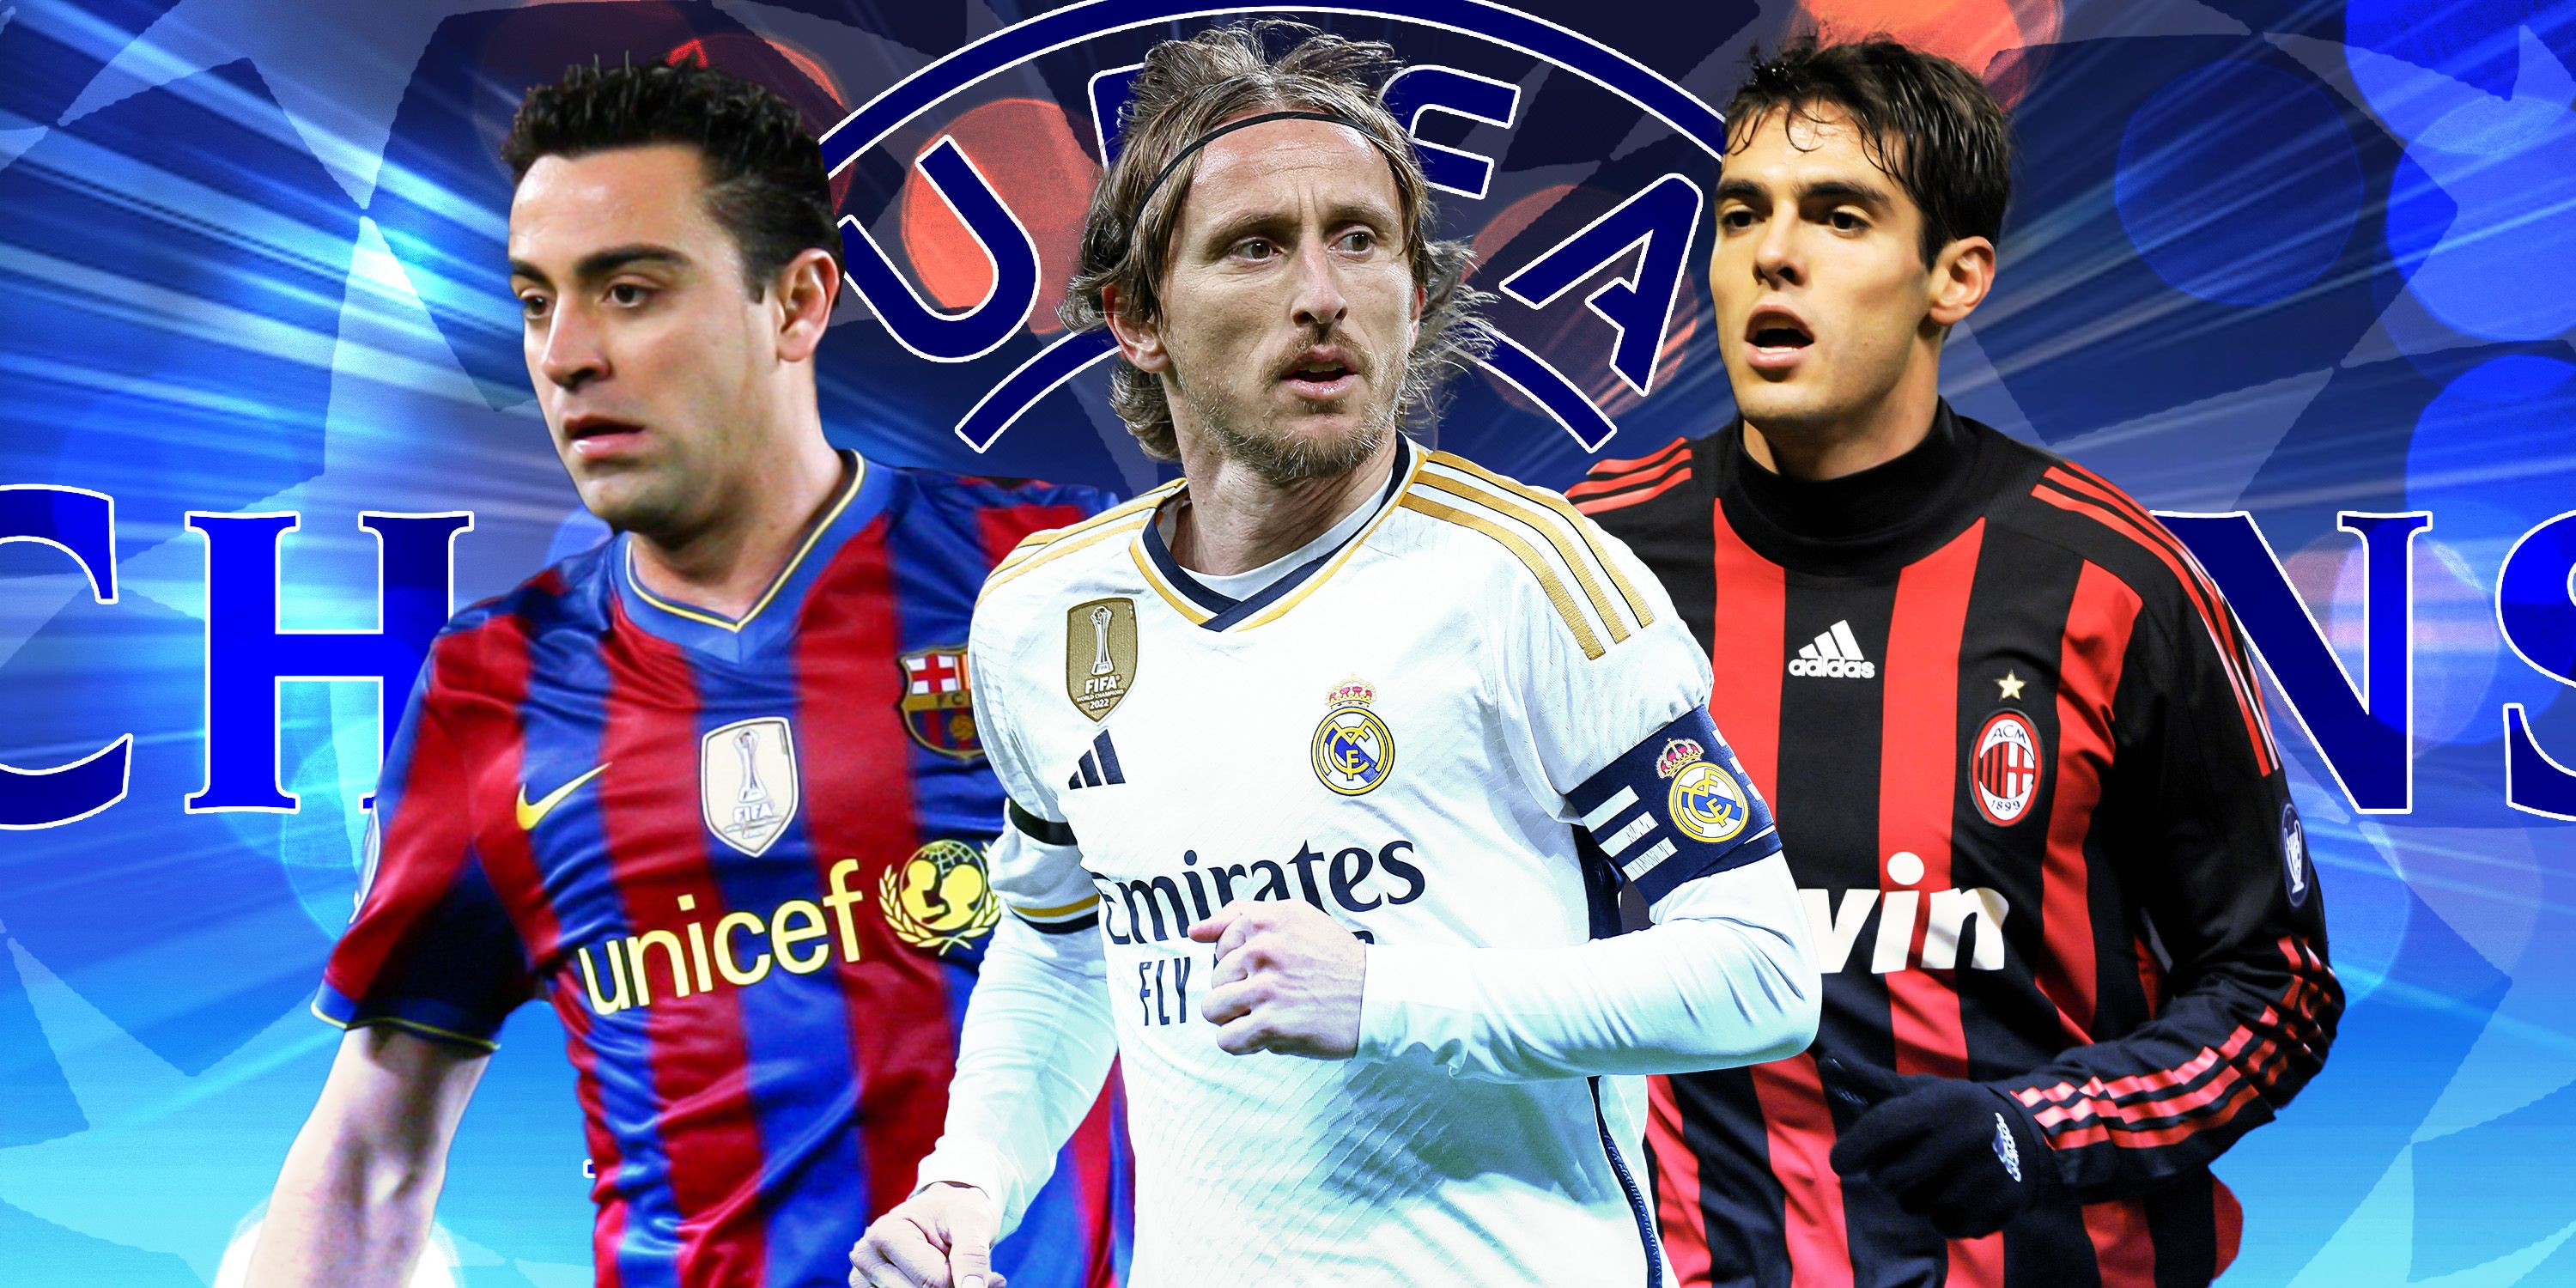 Luka Modric at Real Madrid, Xavi Hernandez at Barcelona, Kaka at AC Milan with Champions League iconography in background